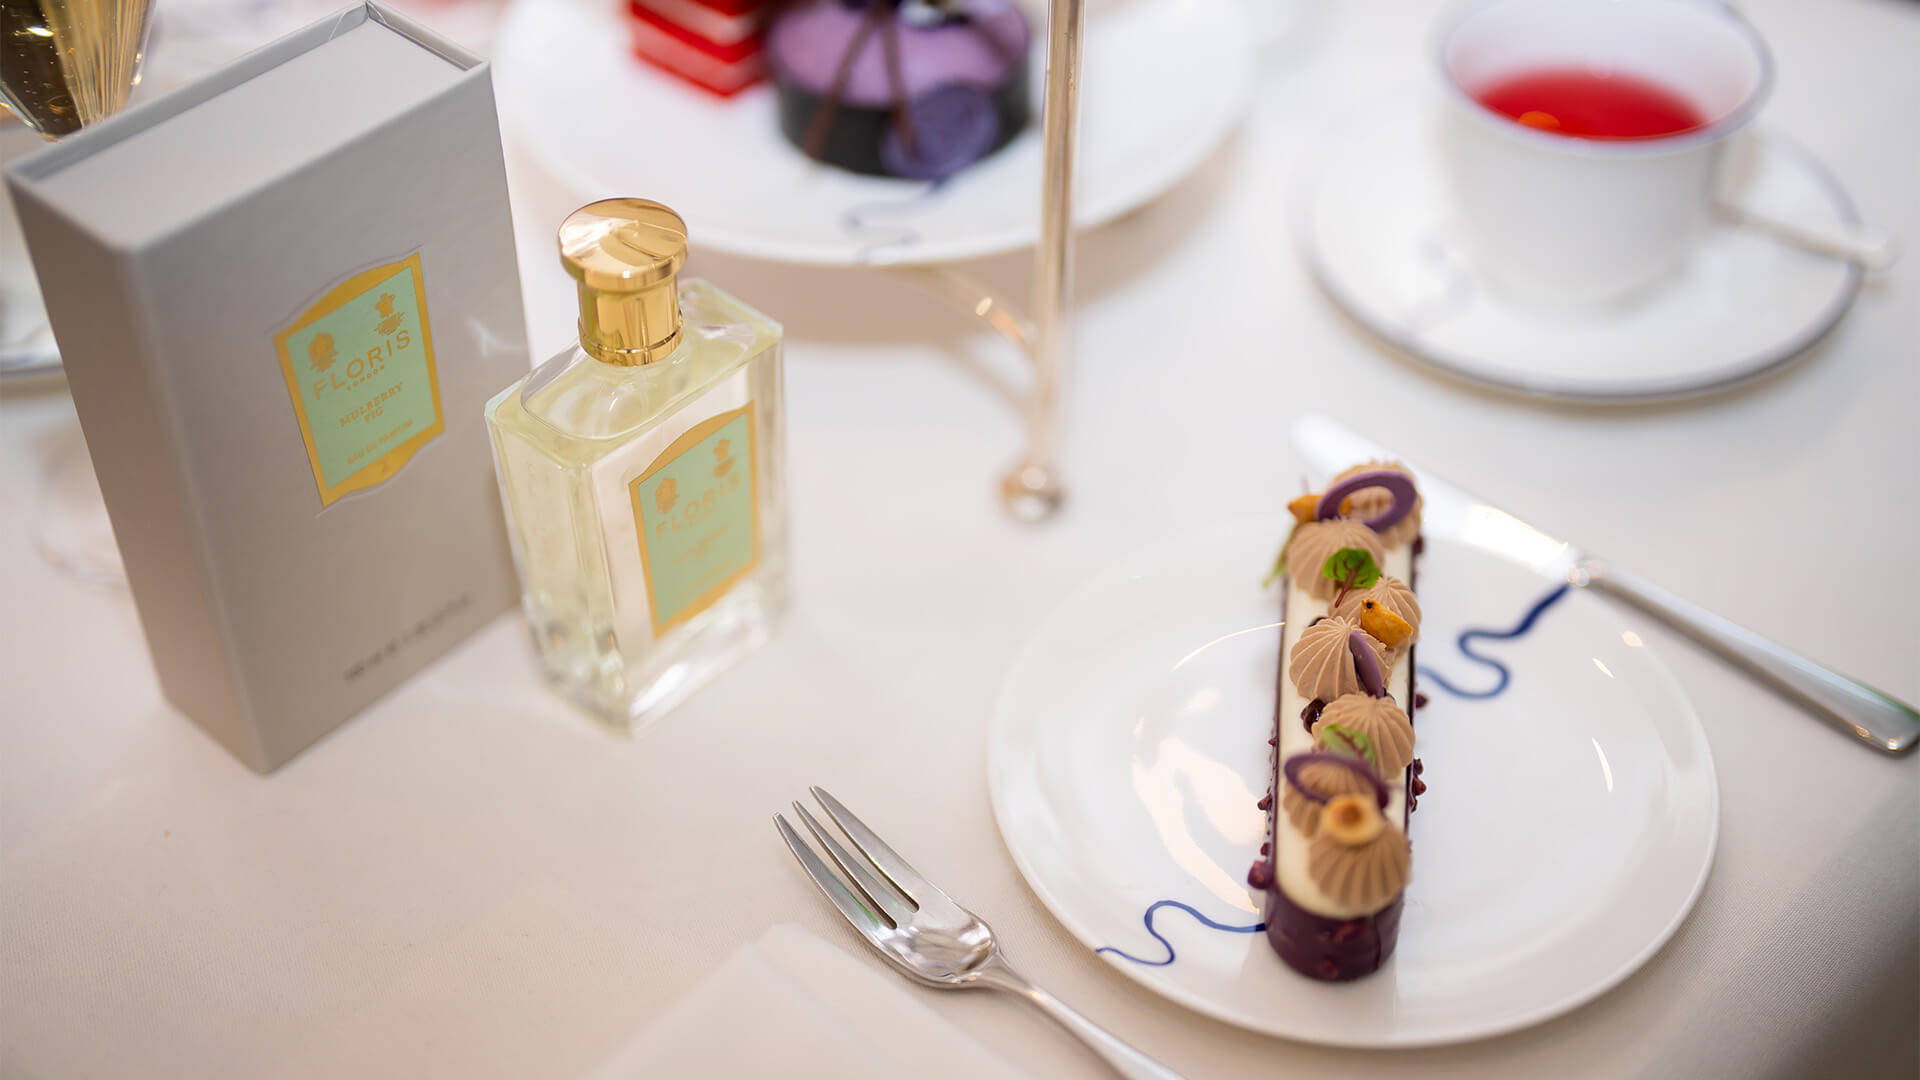 Dessert and perfume on table